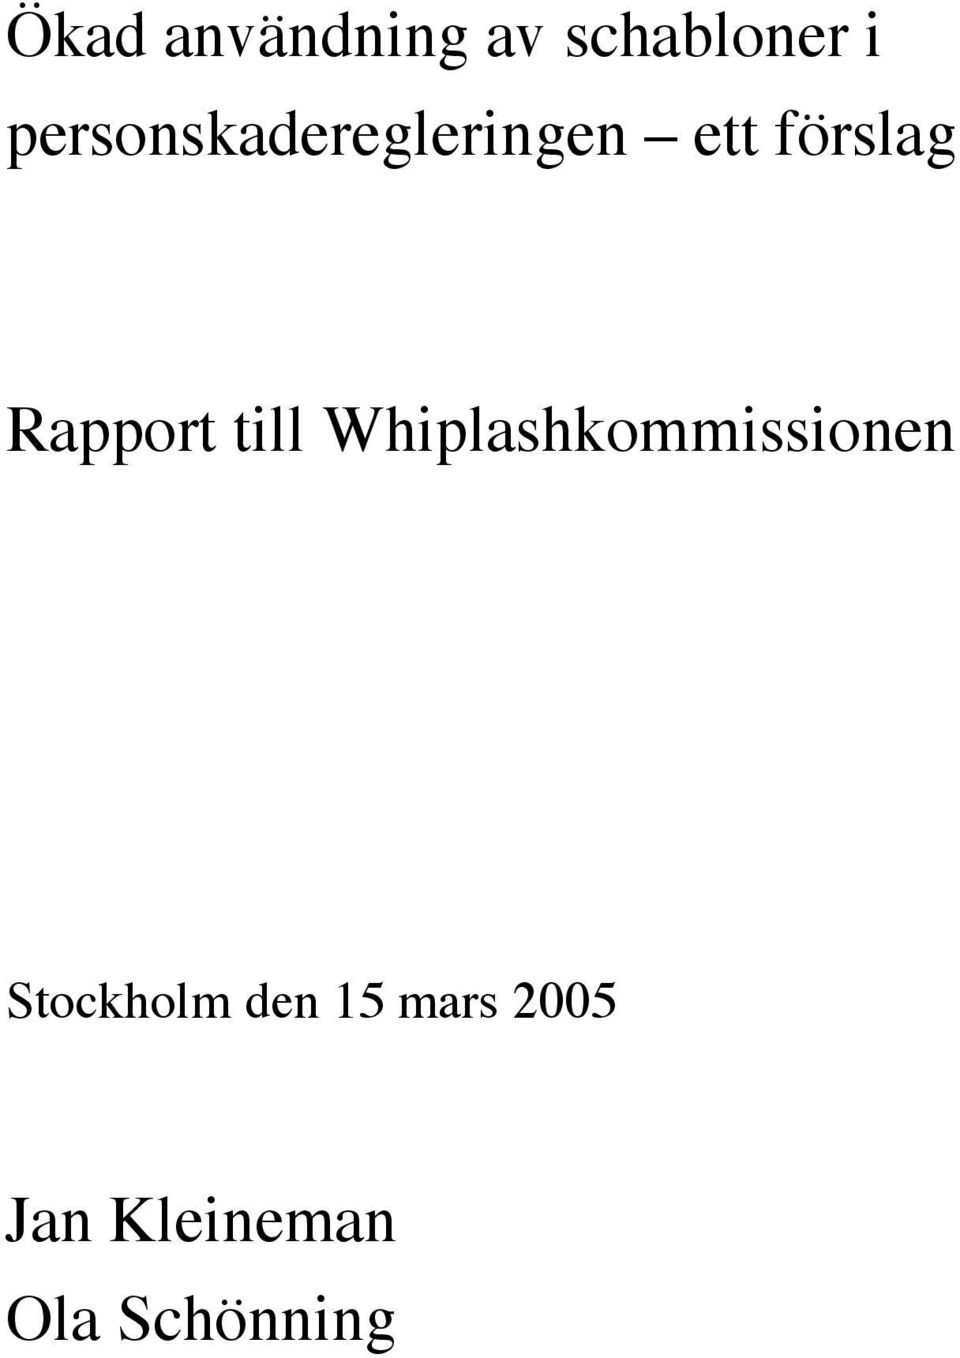 Rapport till Whiplashkommissionen